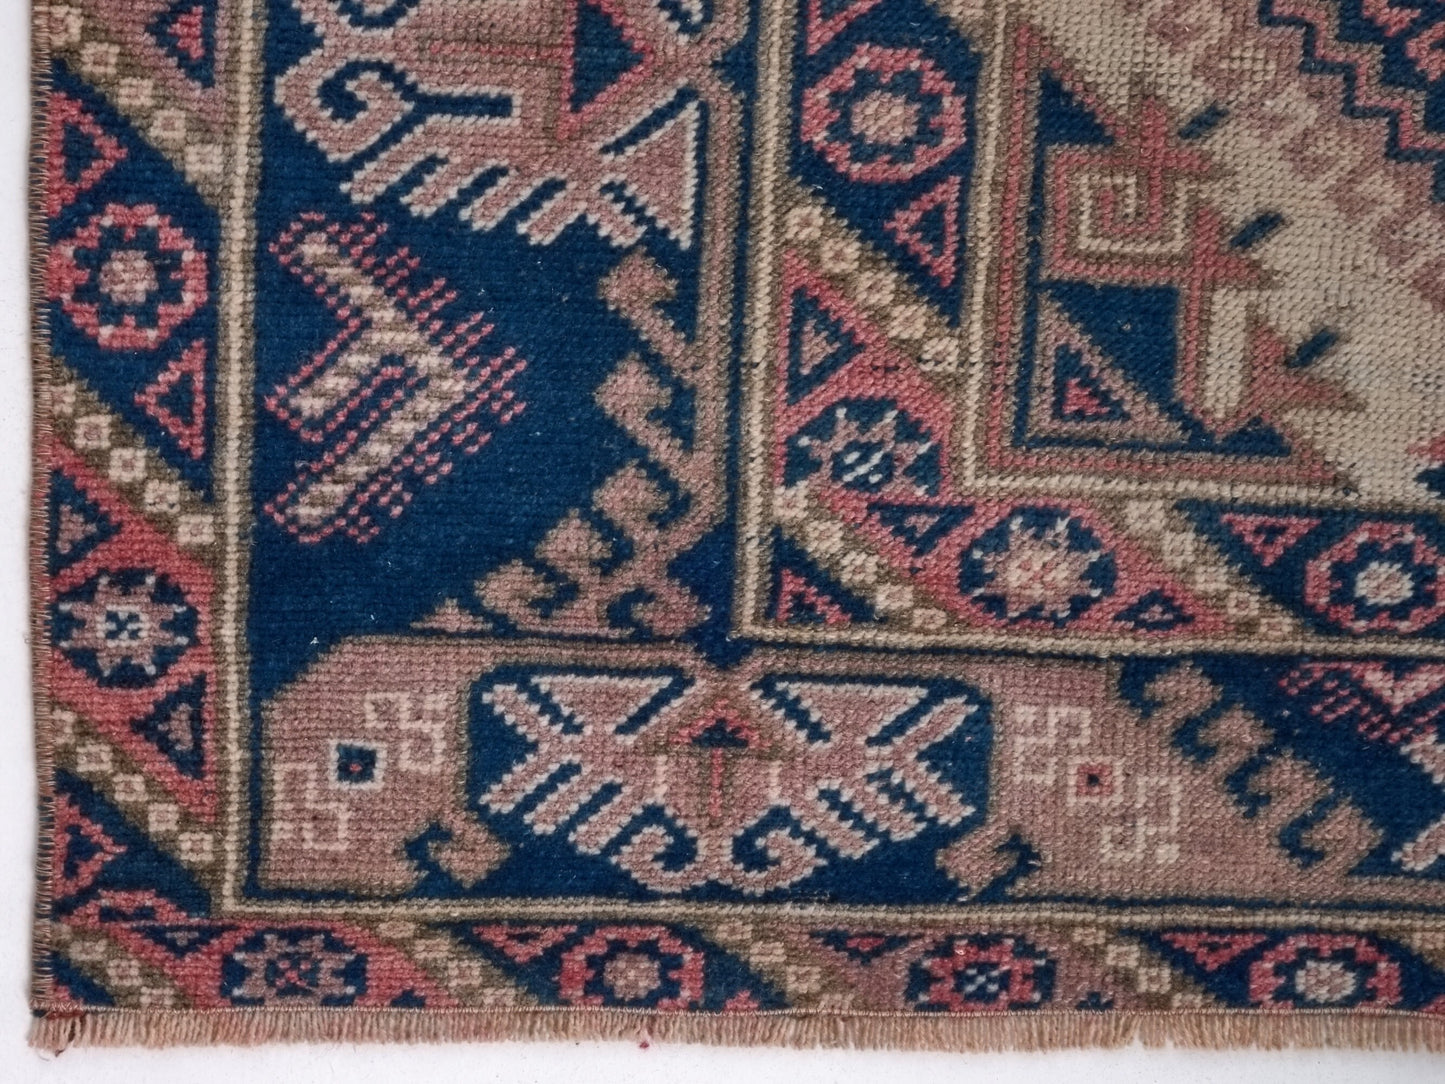 Geometric Turkish rug, Anatolia Rug, Oushak Rug, Vintage Rug, Unique rug, Wool rug, Handmade rug, Small rug 4x6, Entryway rug, 10034